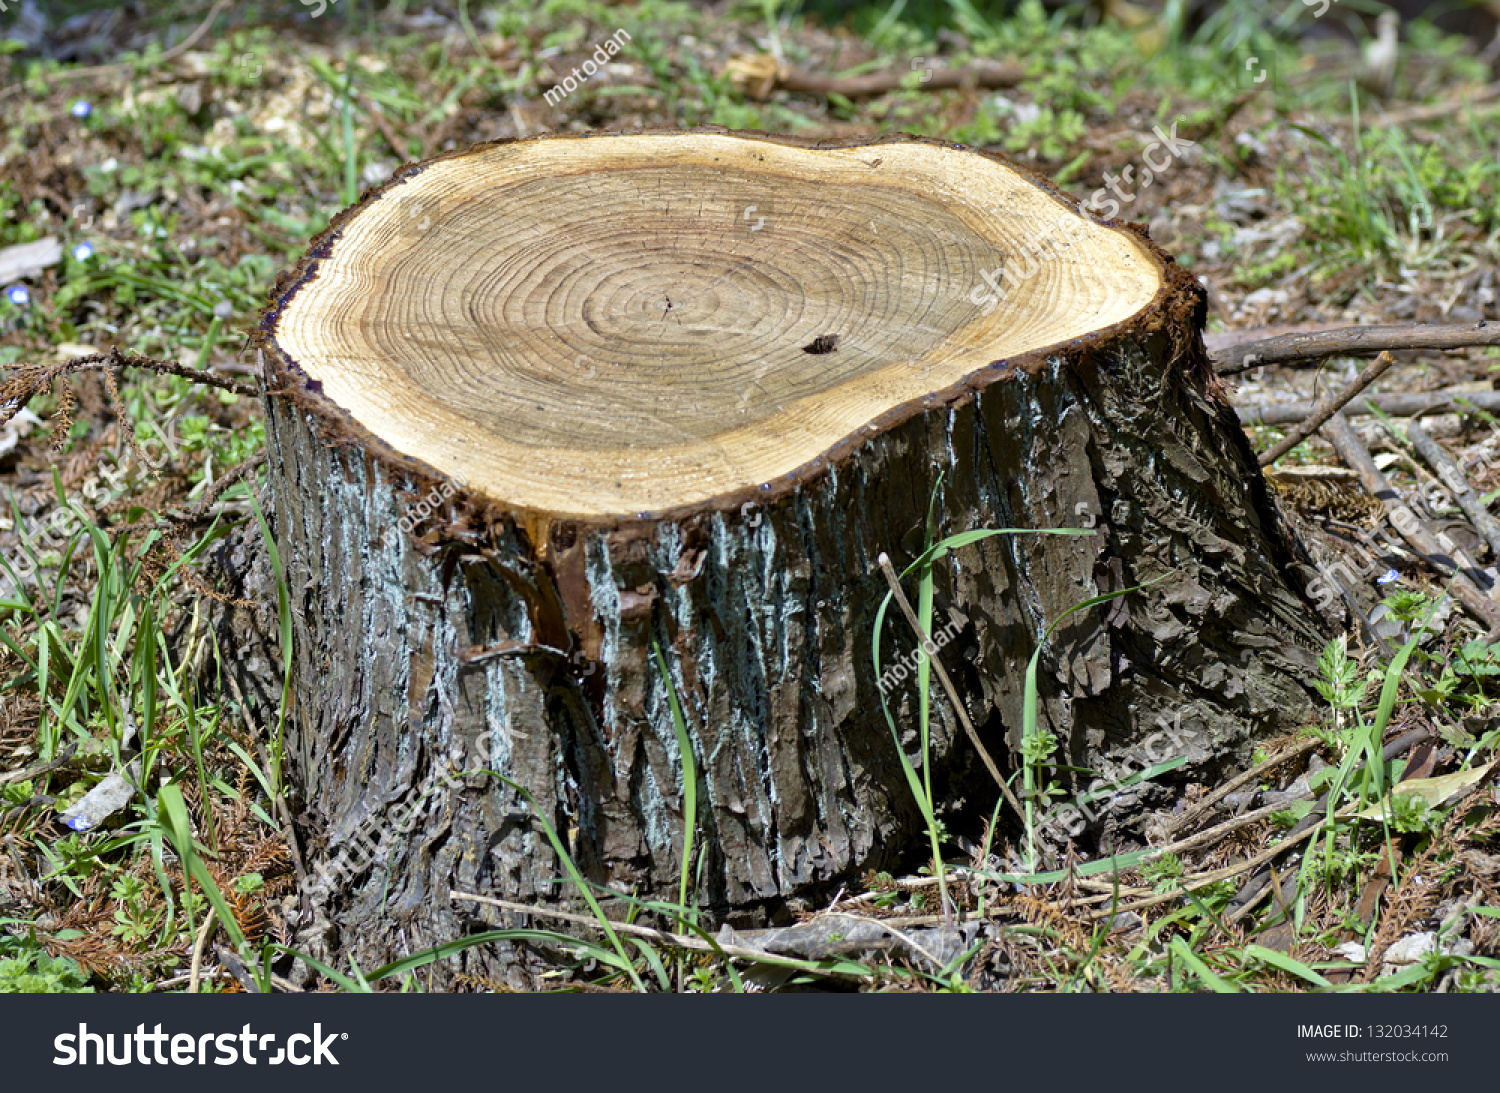 Aladya nude stump